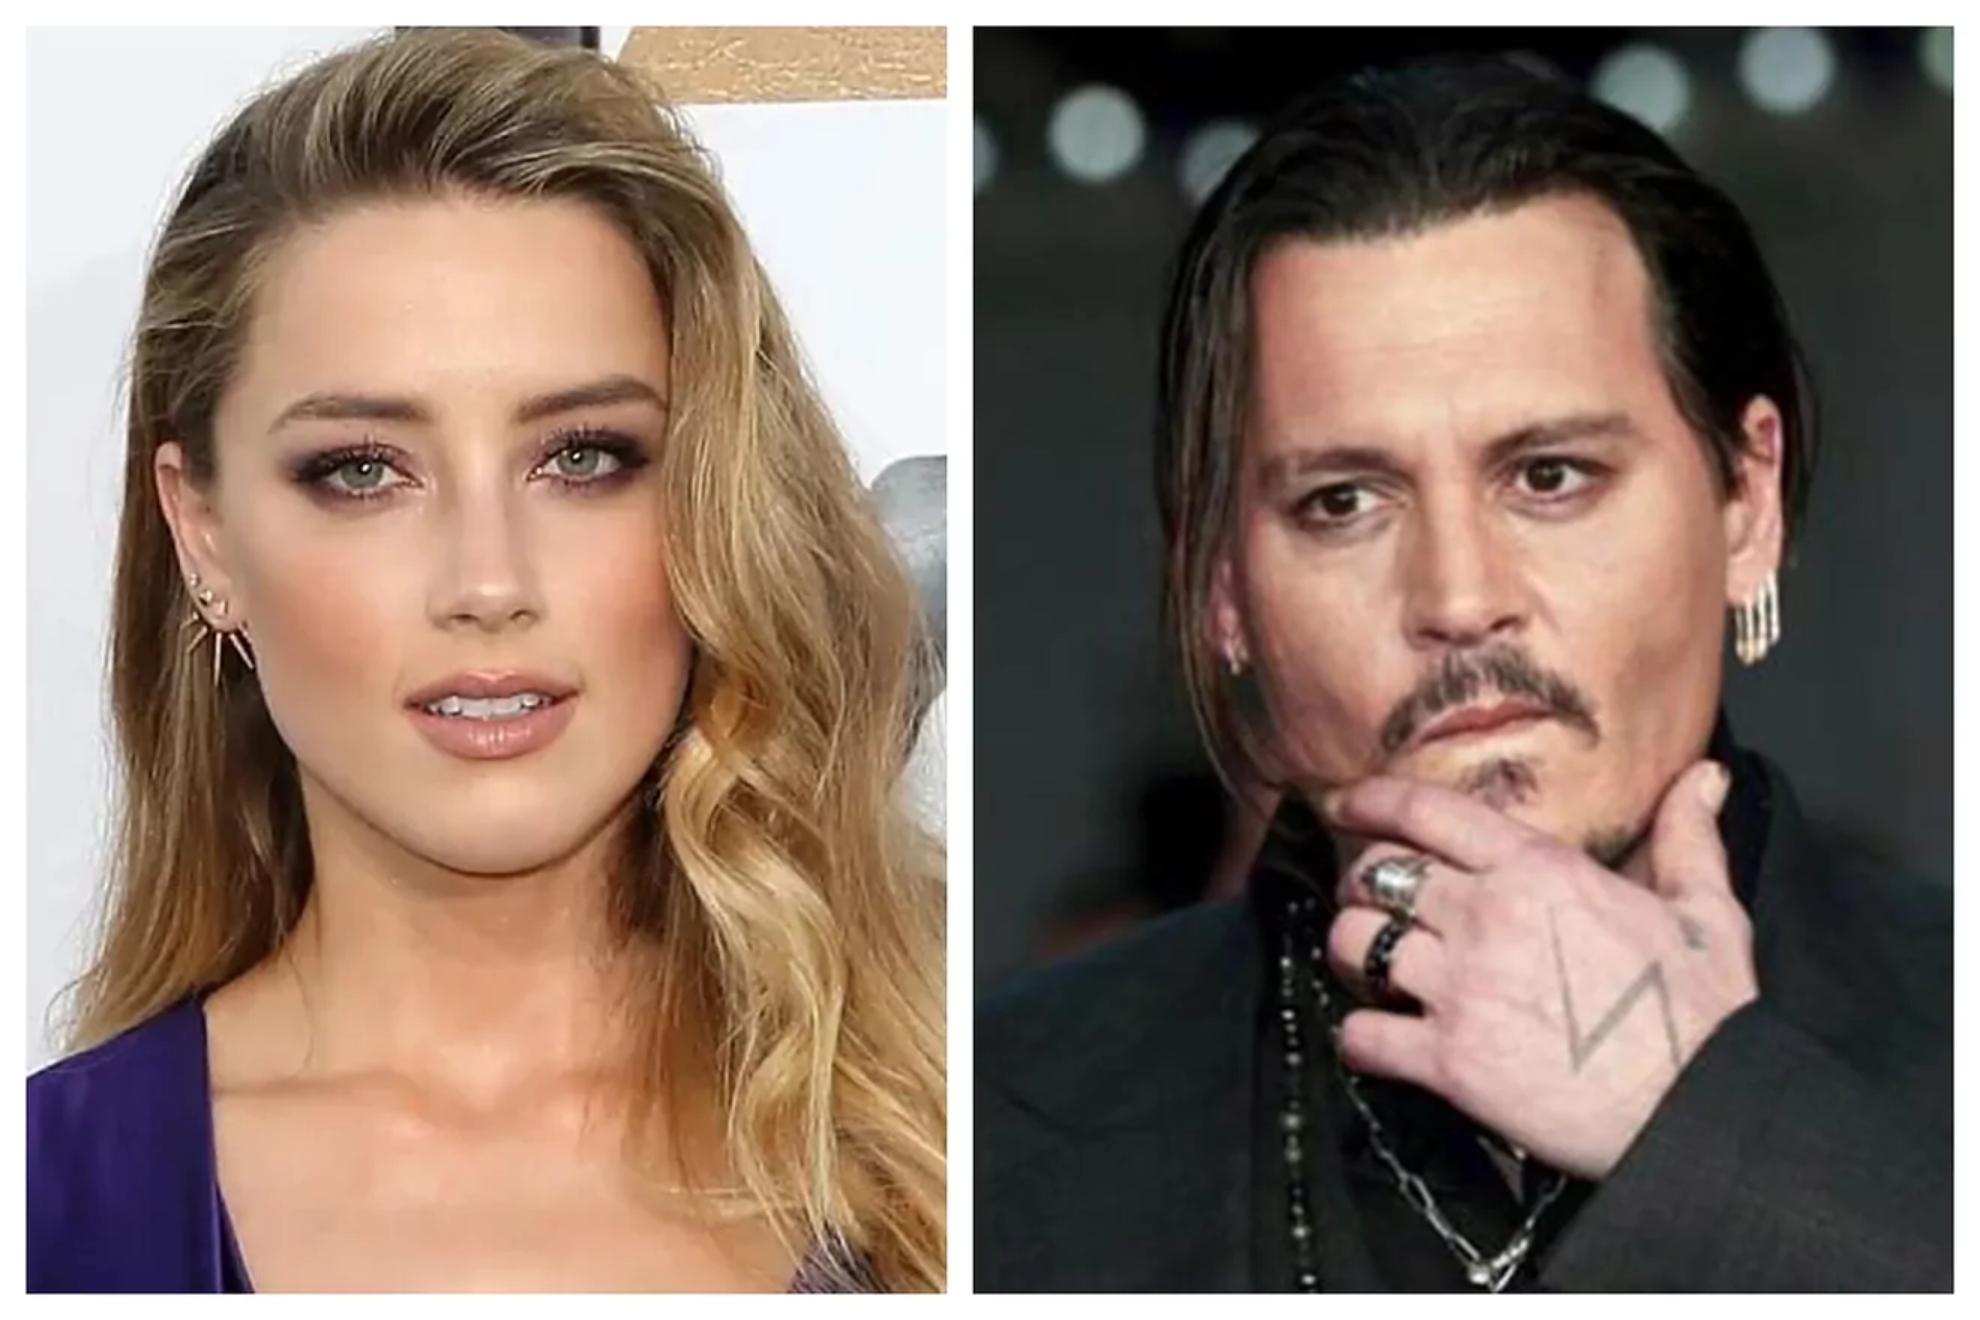 Mashup image of Amber Heard and Johnny Depp